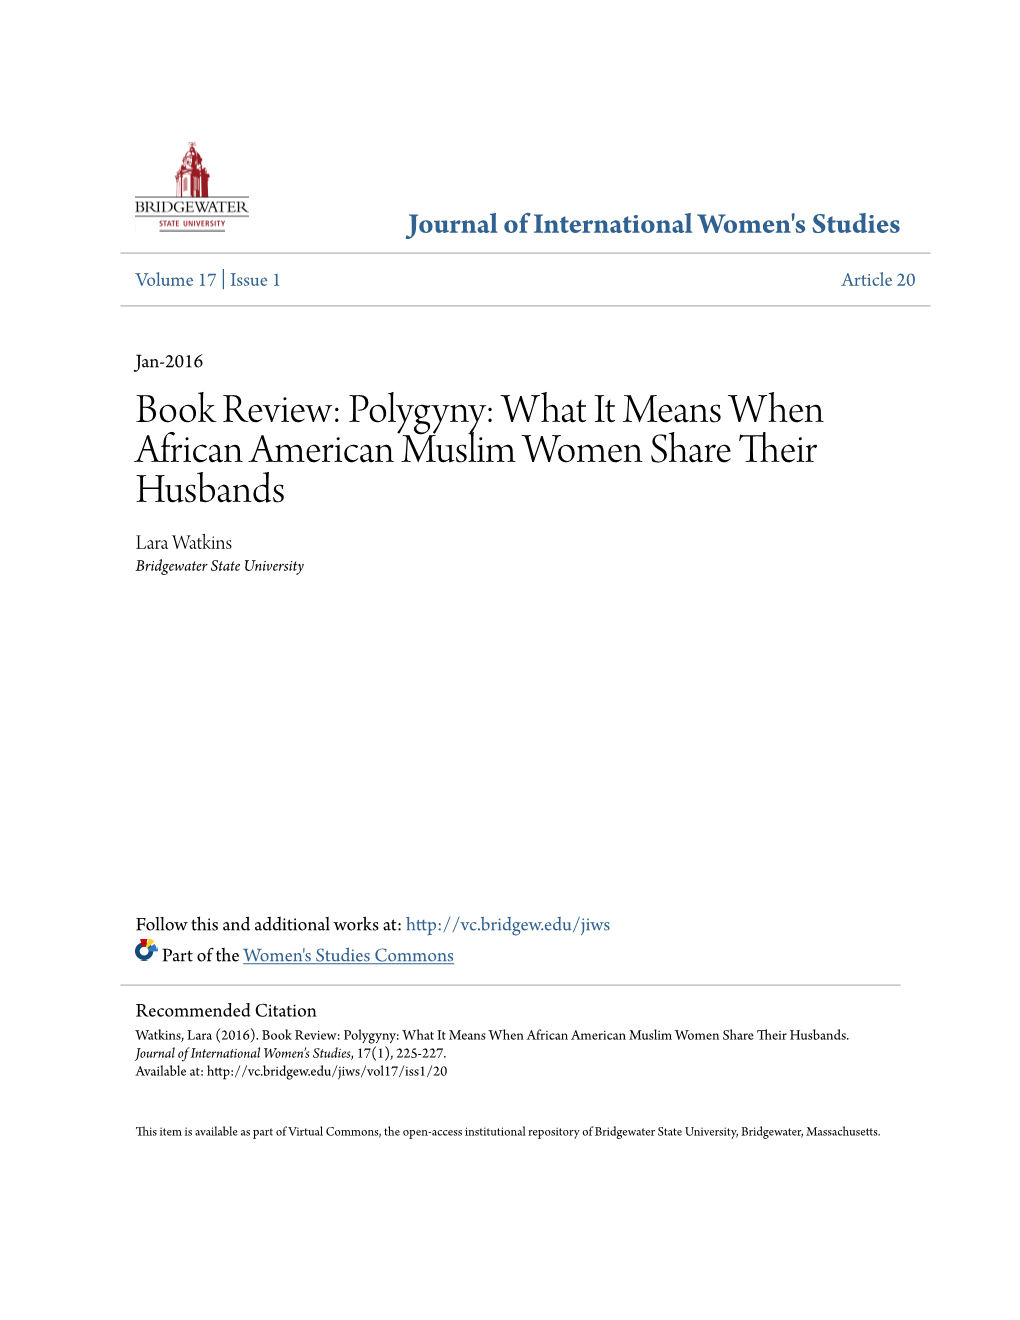 Polygyny: What It Means When African American Muslim Women Share Their Husbands Lara Watkins Bridgewater State University